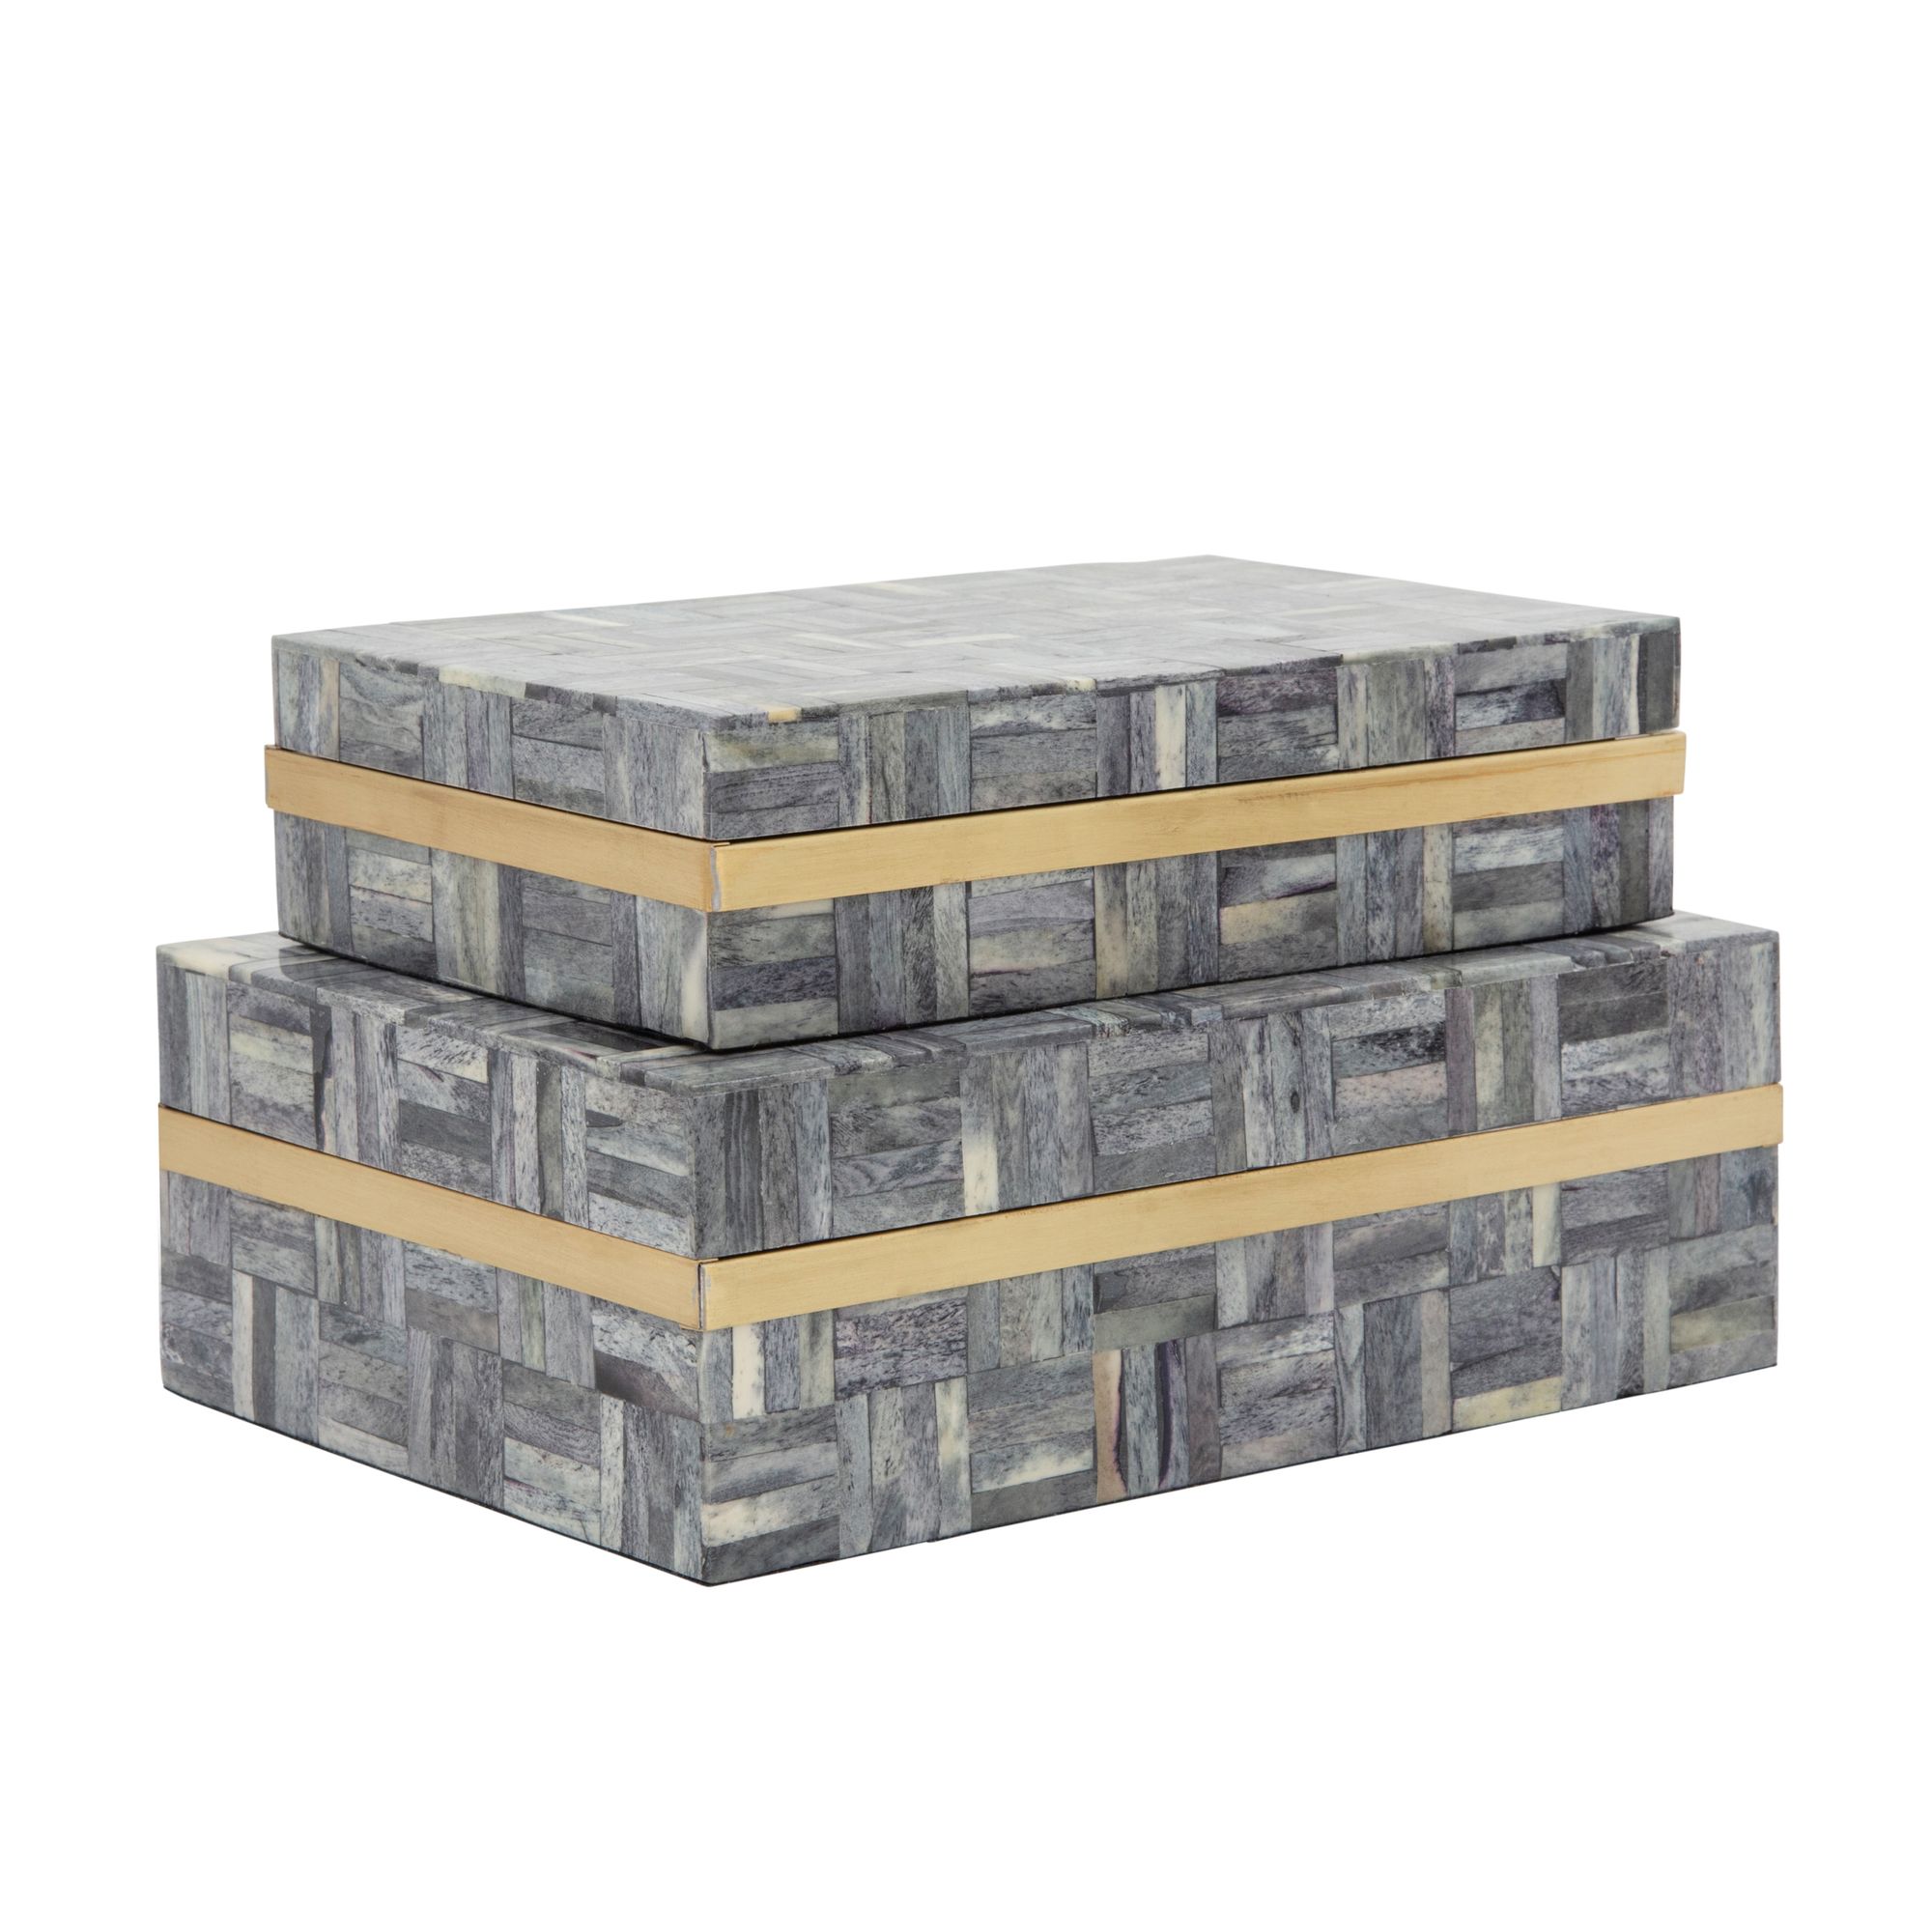 Two Decobox Rectangular Storage Box 33L – AHPI